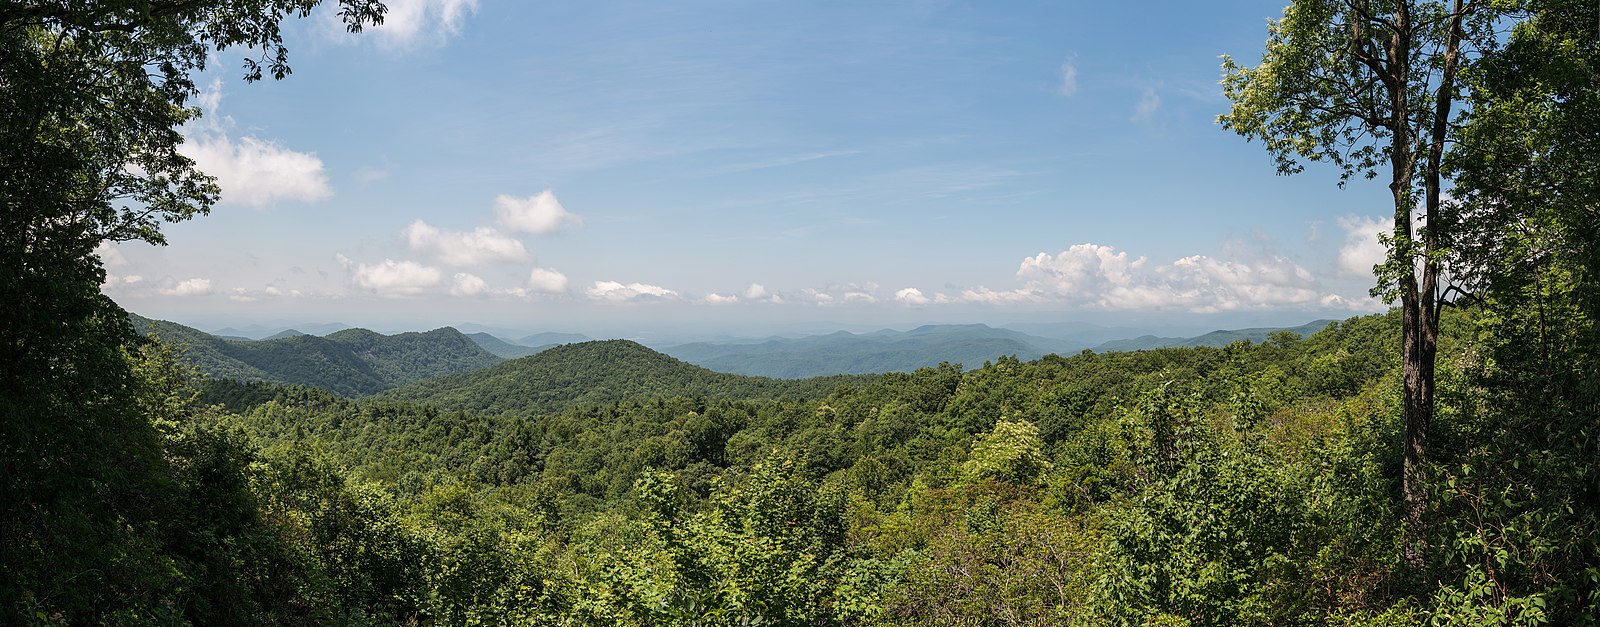 View of Blue Ridge Mountains from Sassafras Mountain, Pickens County, South Carolina (2016)